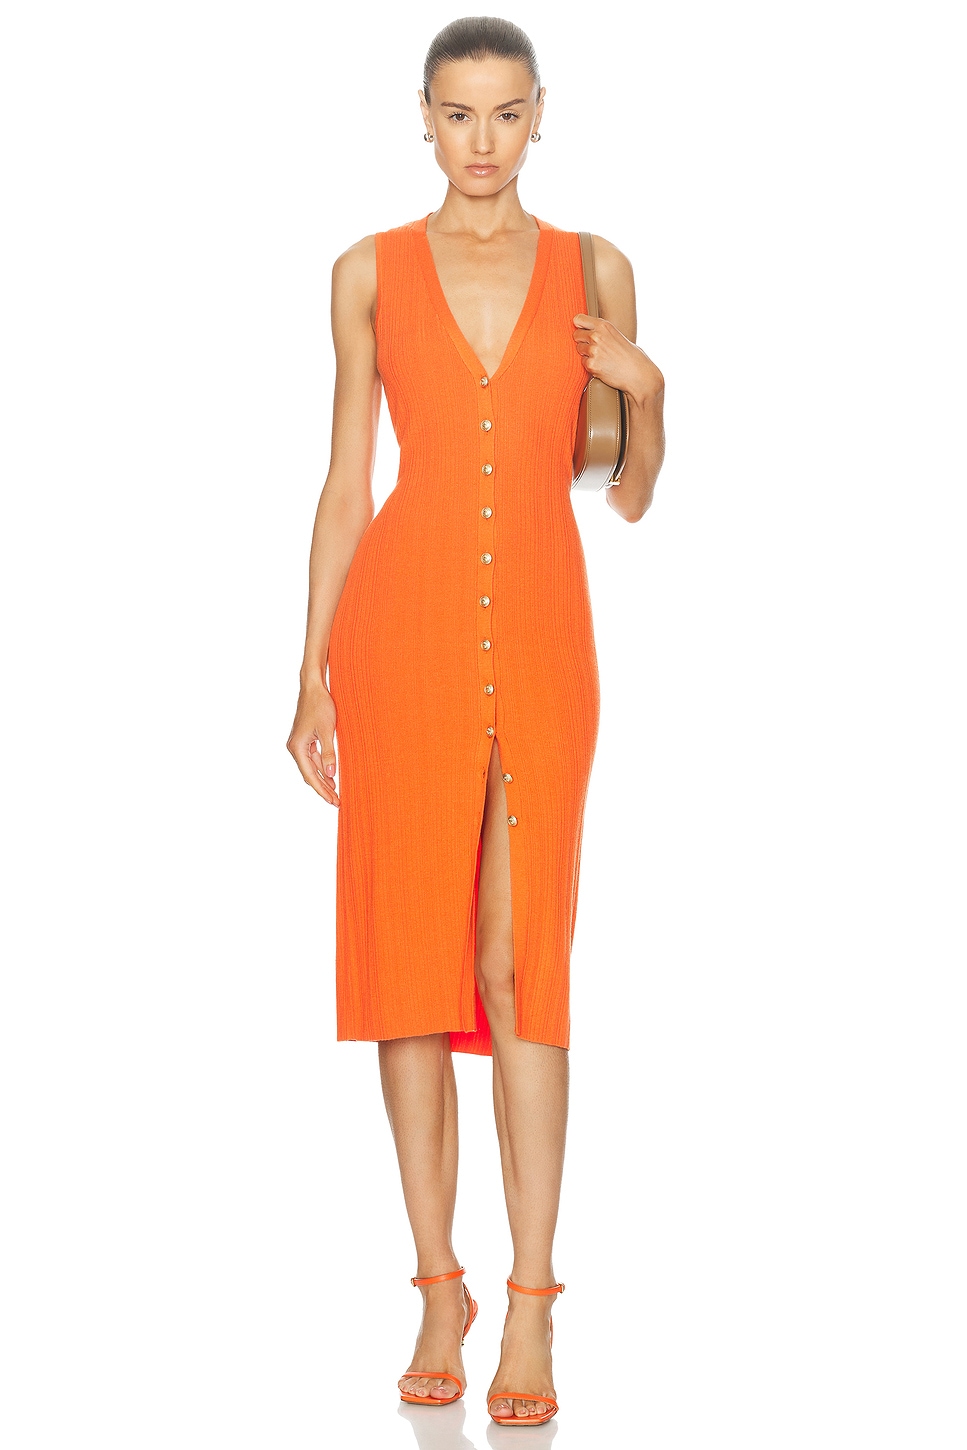 Domino Sleeveless Button Dress in Orange